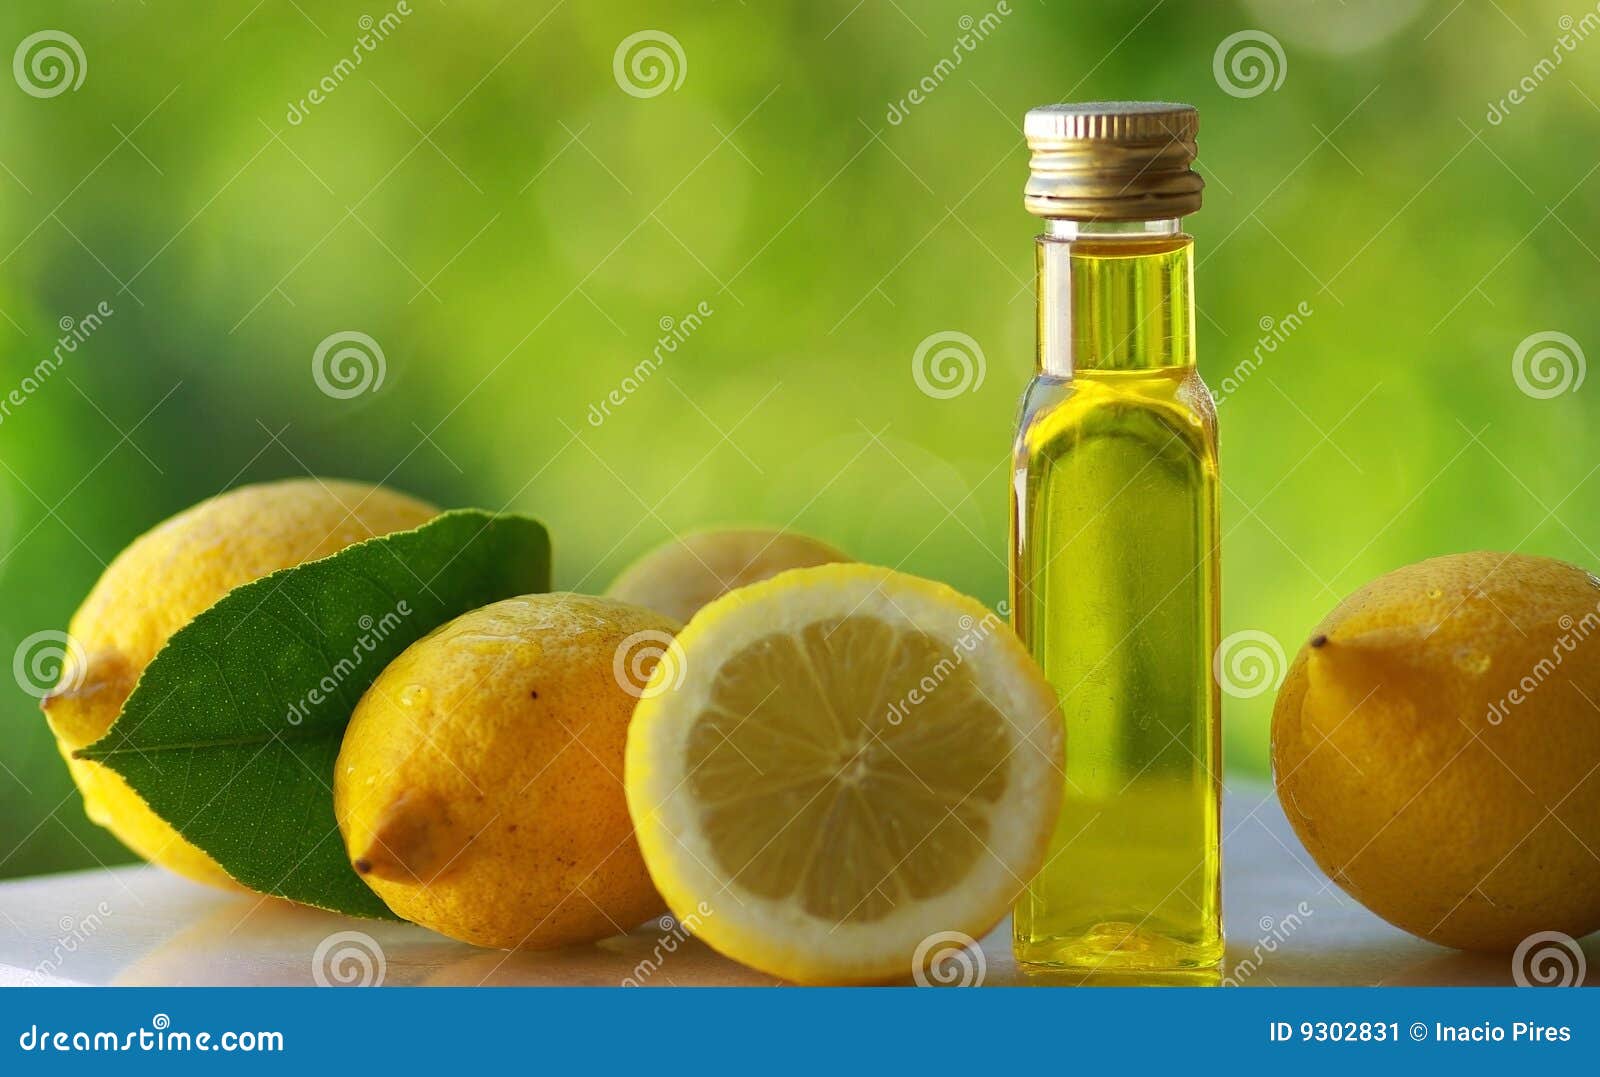 lemons and olive oil.